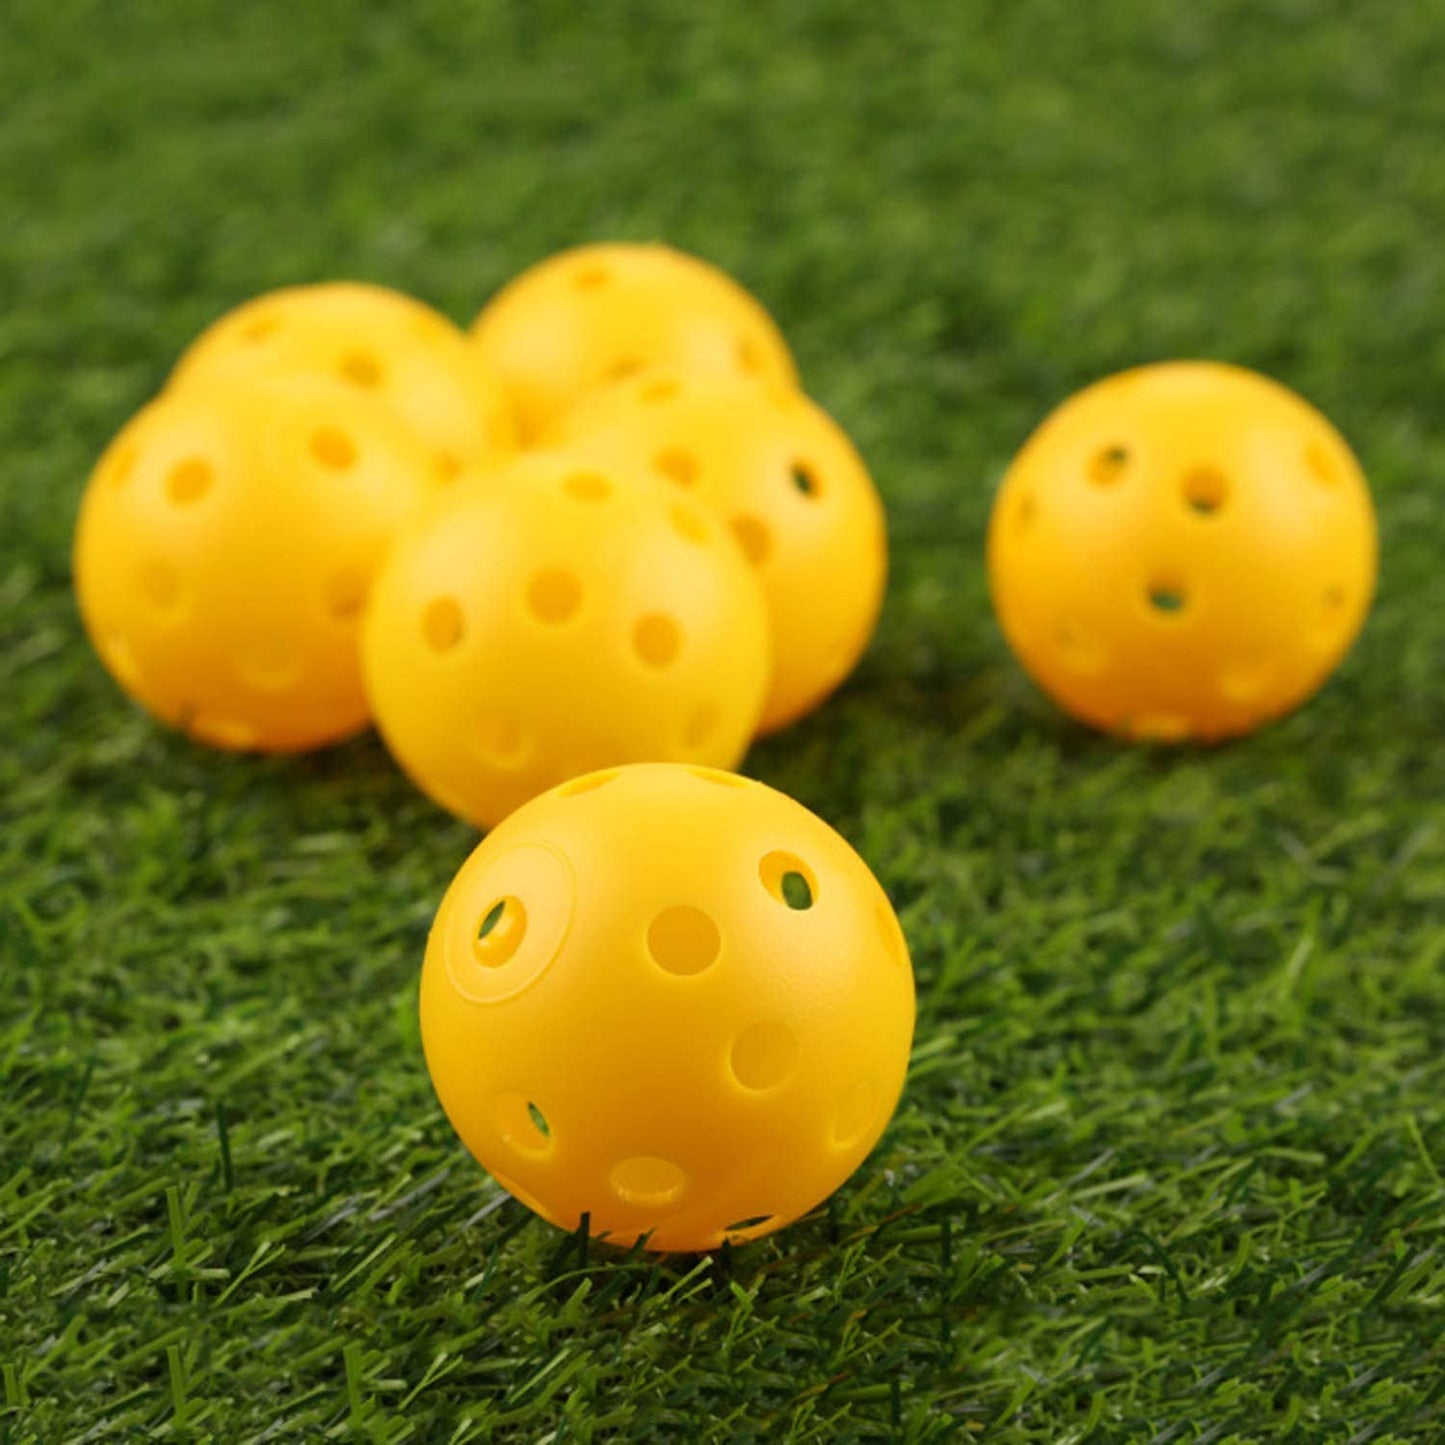 24 Pack Golf Practice Balls Plastic Colored